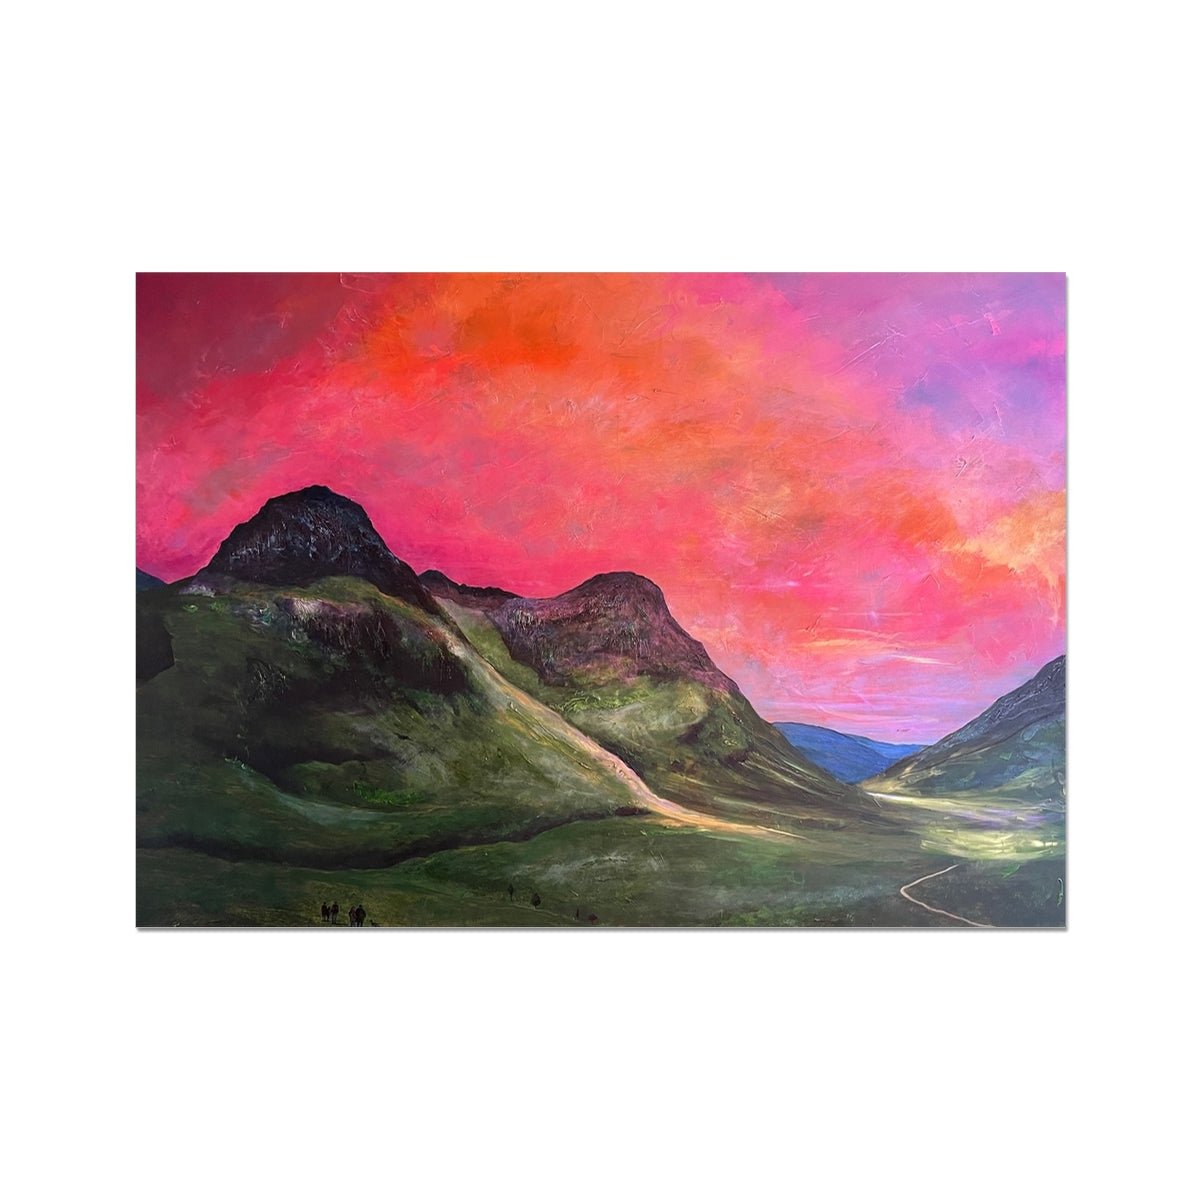 Glencoe Dusk Painting | Fine Art Prints From Scotland-Unframed Prints-Glencoe Art Gallery-A2 Landscape-Paintings, Prints, Homeware, Art Gifts From Scotland By Scottish Artist Kevin Hunter